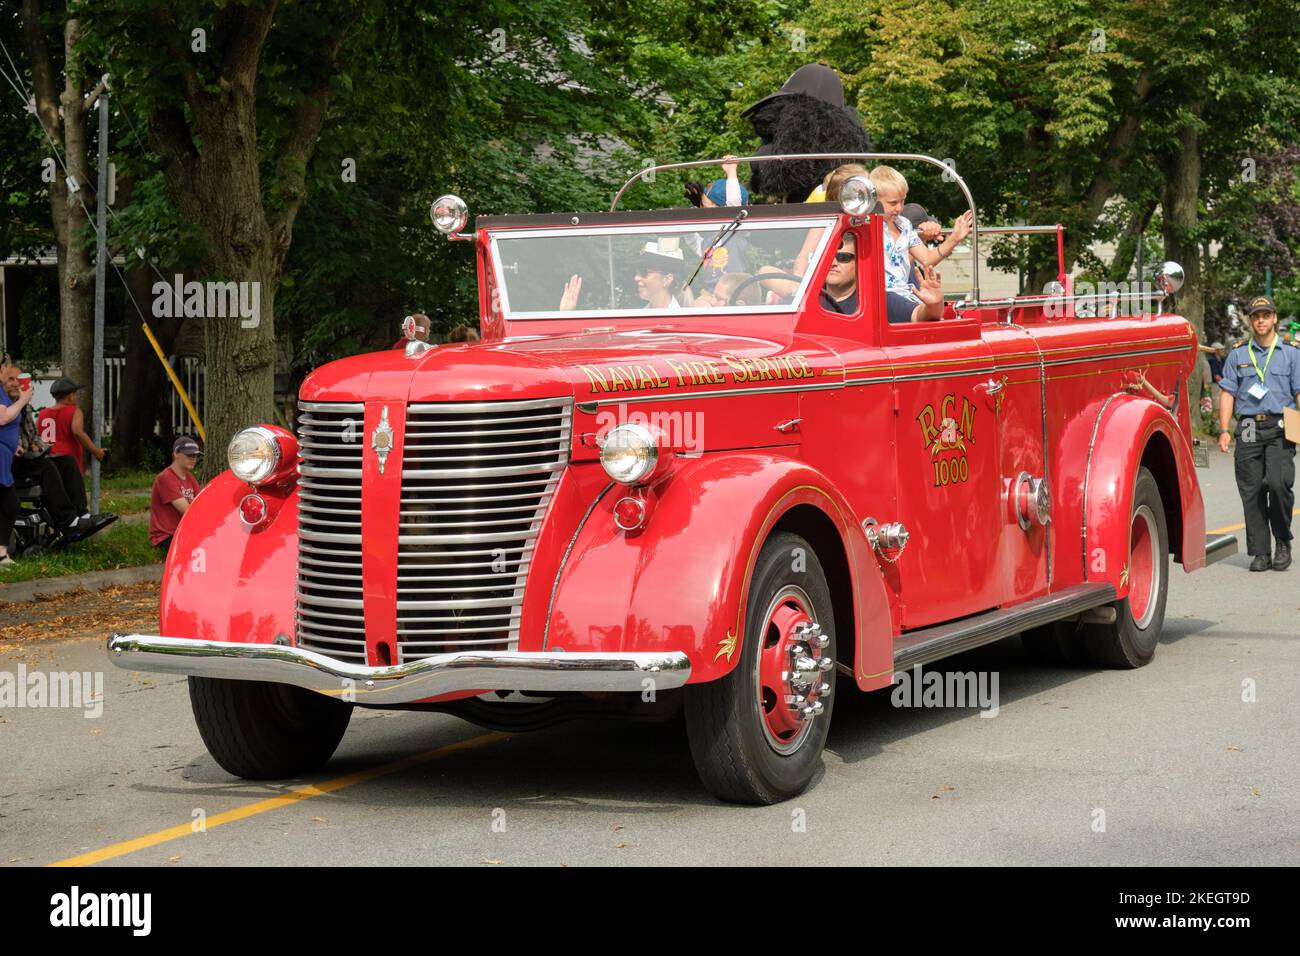 vintage firetruck in Halifax parade Stock Photo